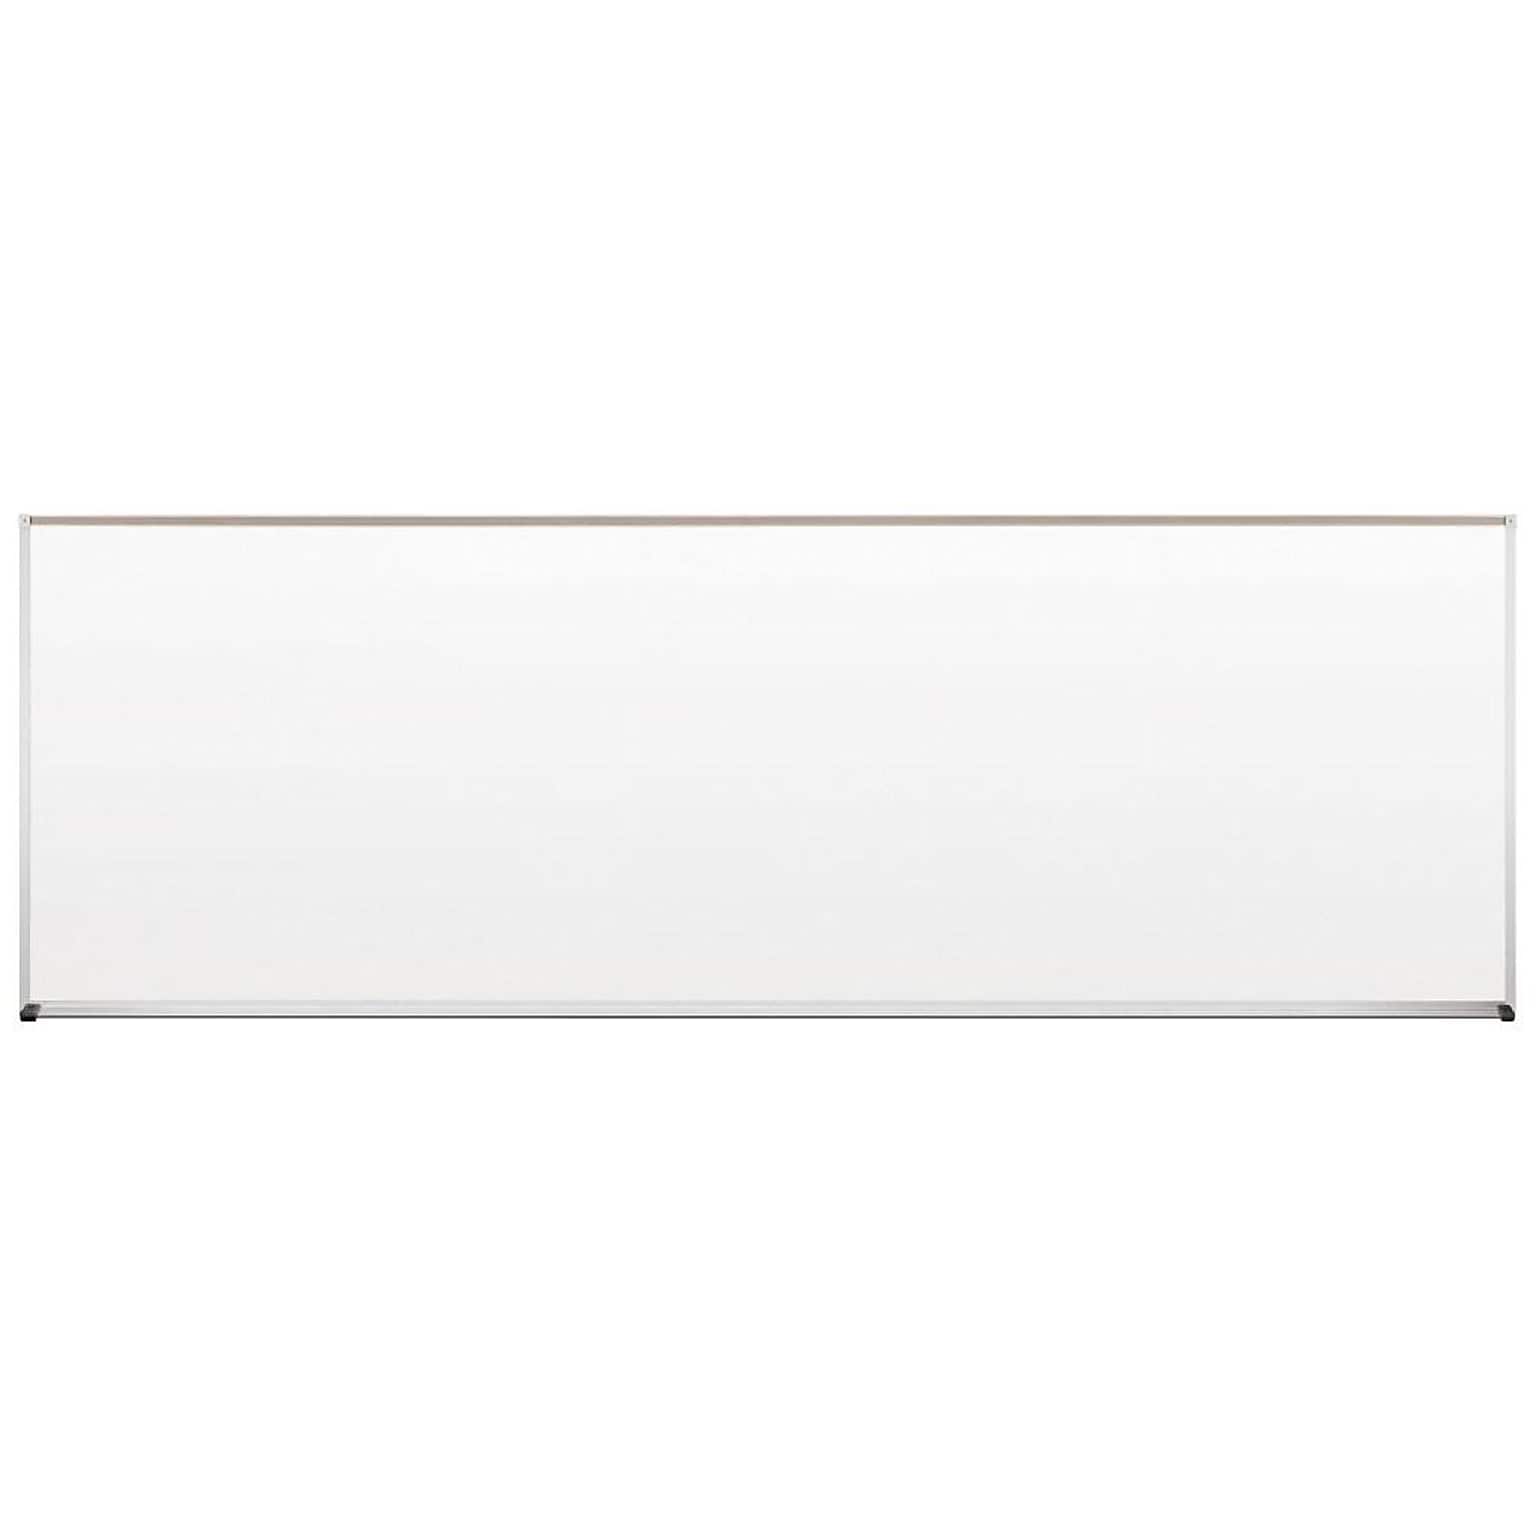 Balt Porcelain Dry-Erase Whiteboard, Anodized Aluminum Frame, 12 x 4 (202AM)